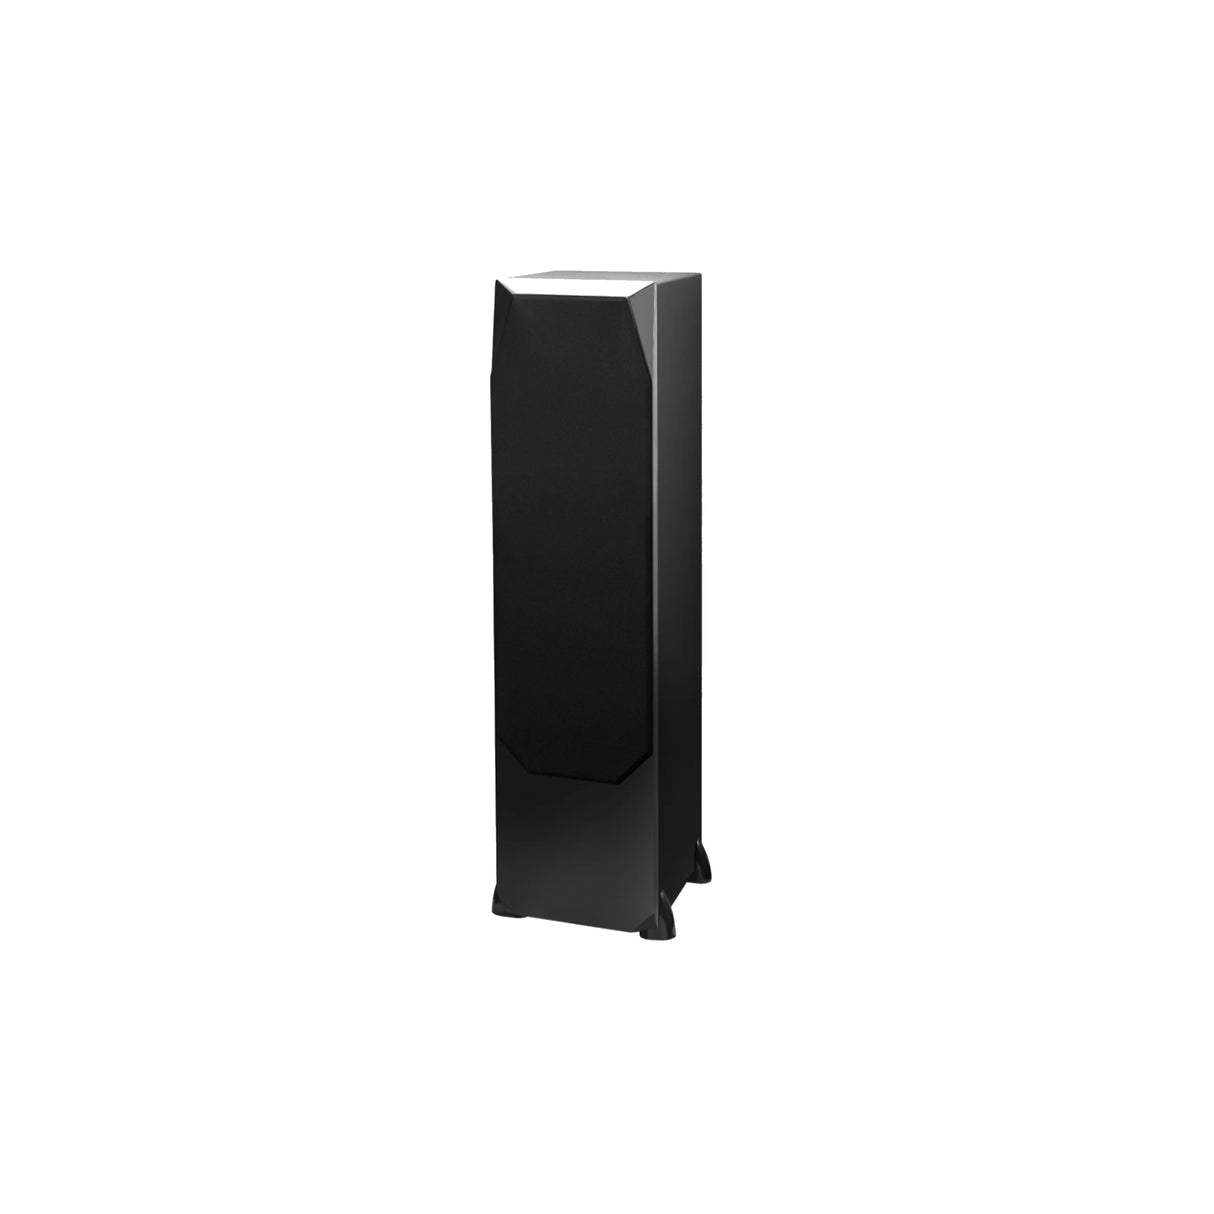 Emotiva Airmotiv T2+ 3-Way Floor Standing Speaker (Pair)